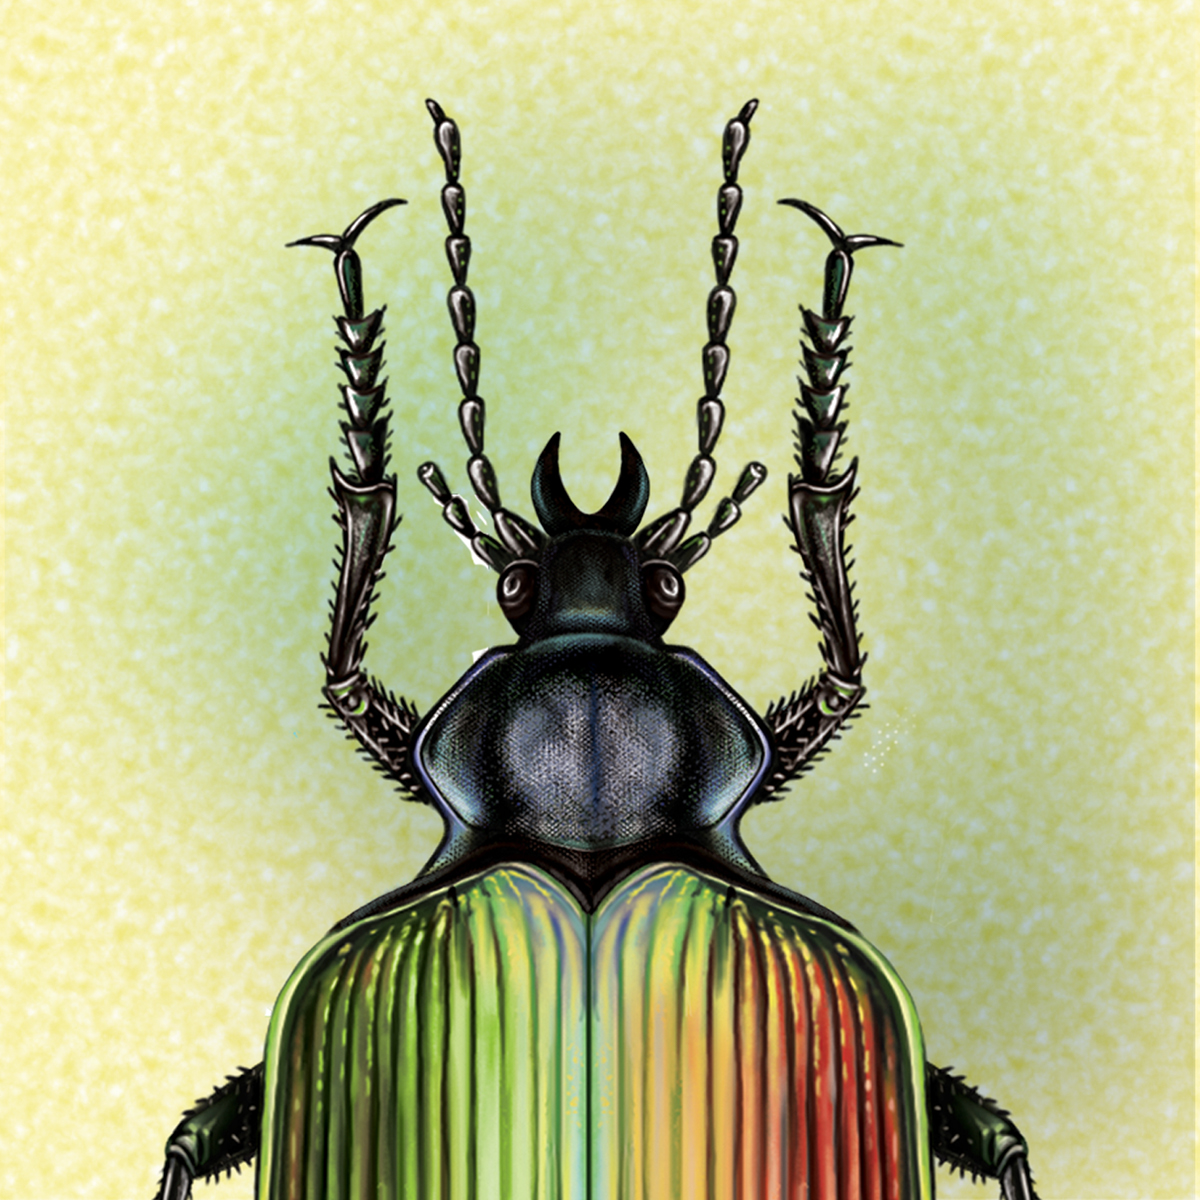 beetle böcek illüstrasyonu böcek entomology entomological digitalart calosama sycophanta avcı orman caterpillar